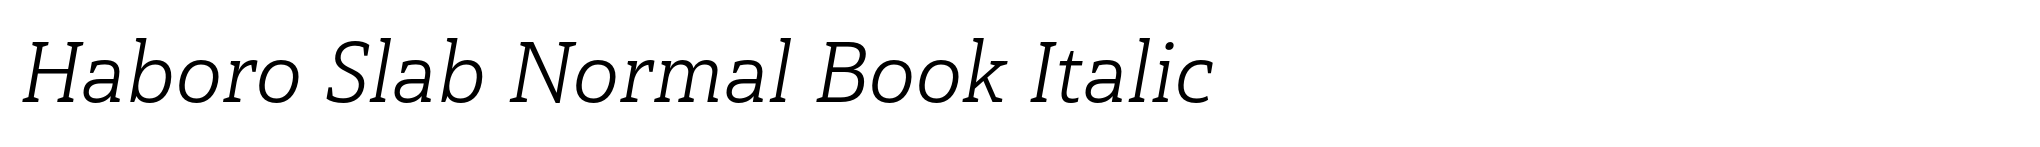 Haboro Slab Normal Book Italic image